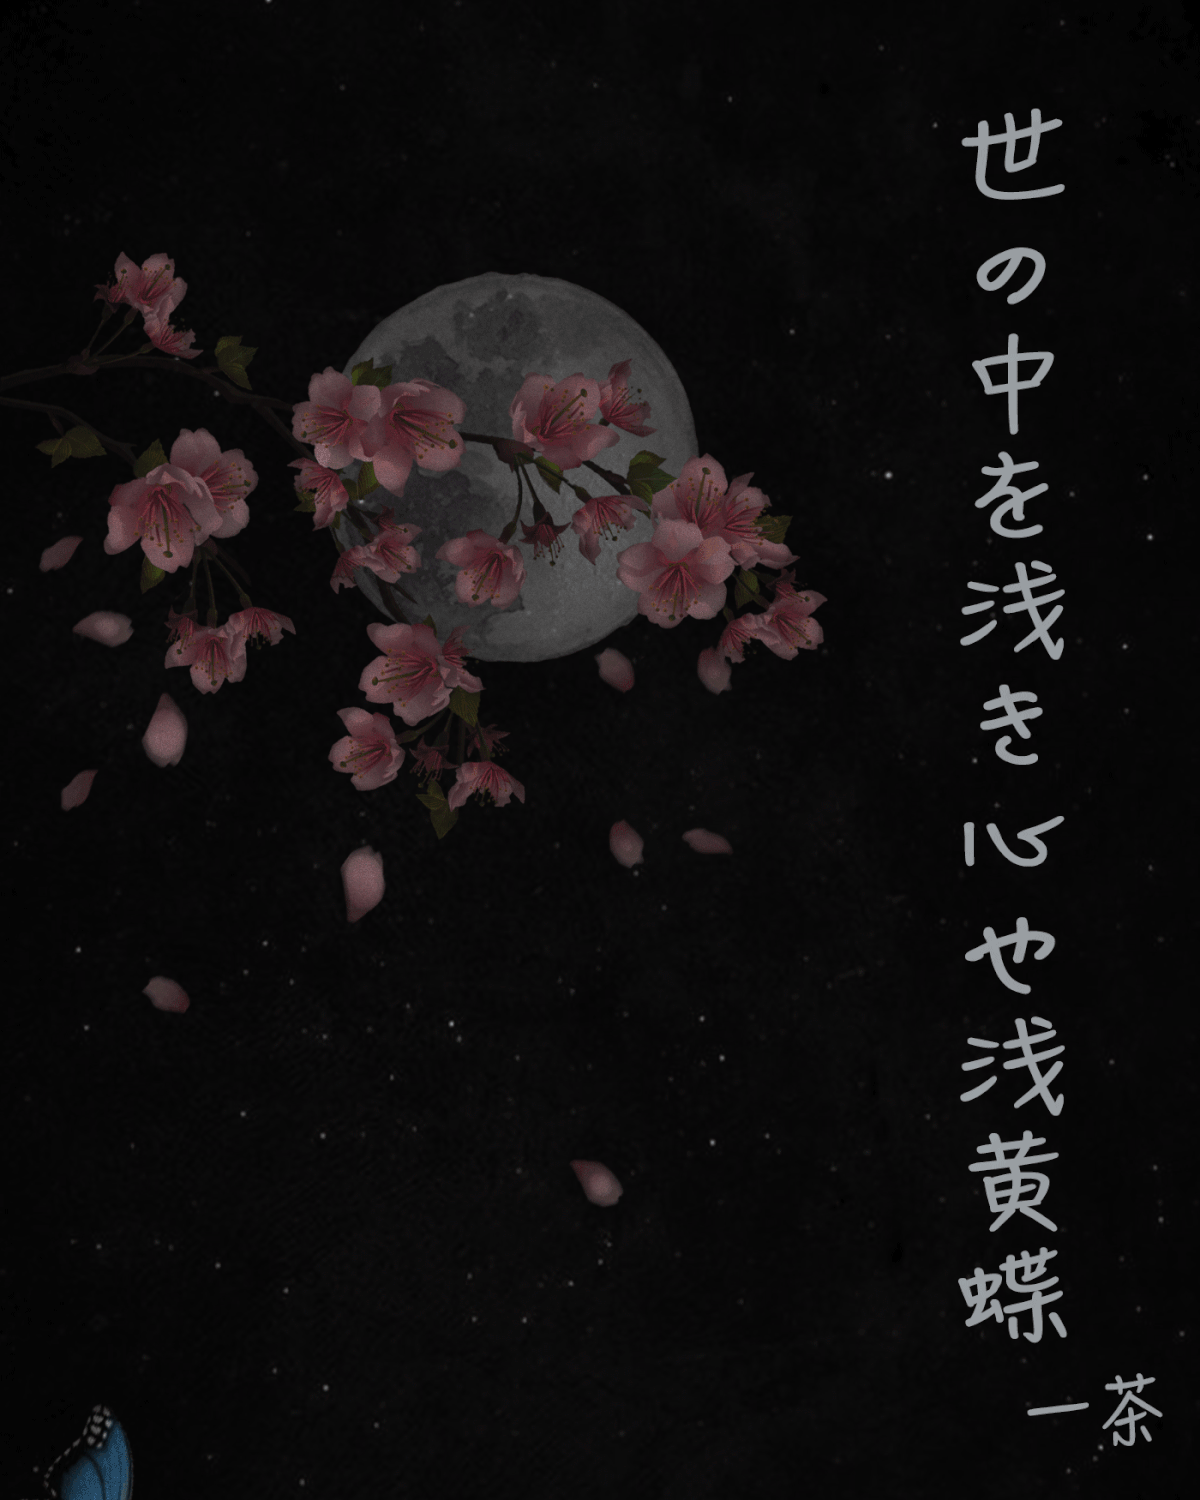 Haiku japanese haikus poster Poster Design dark fantasy night Nature